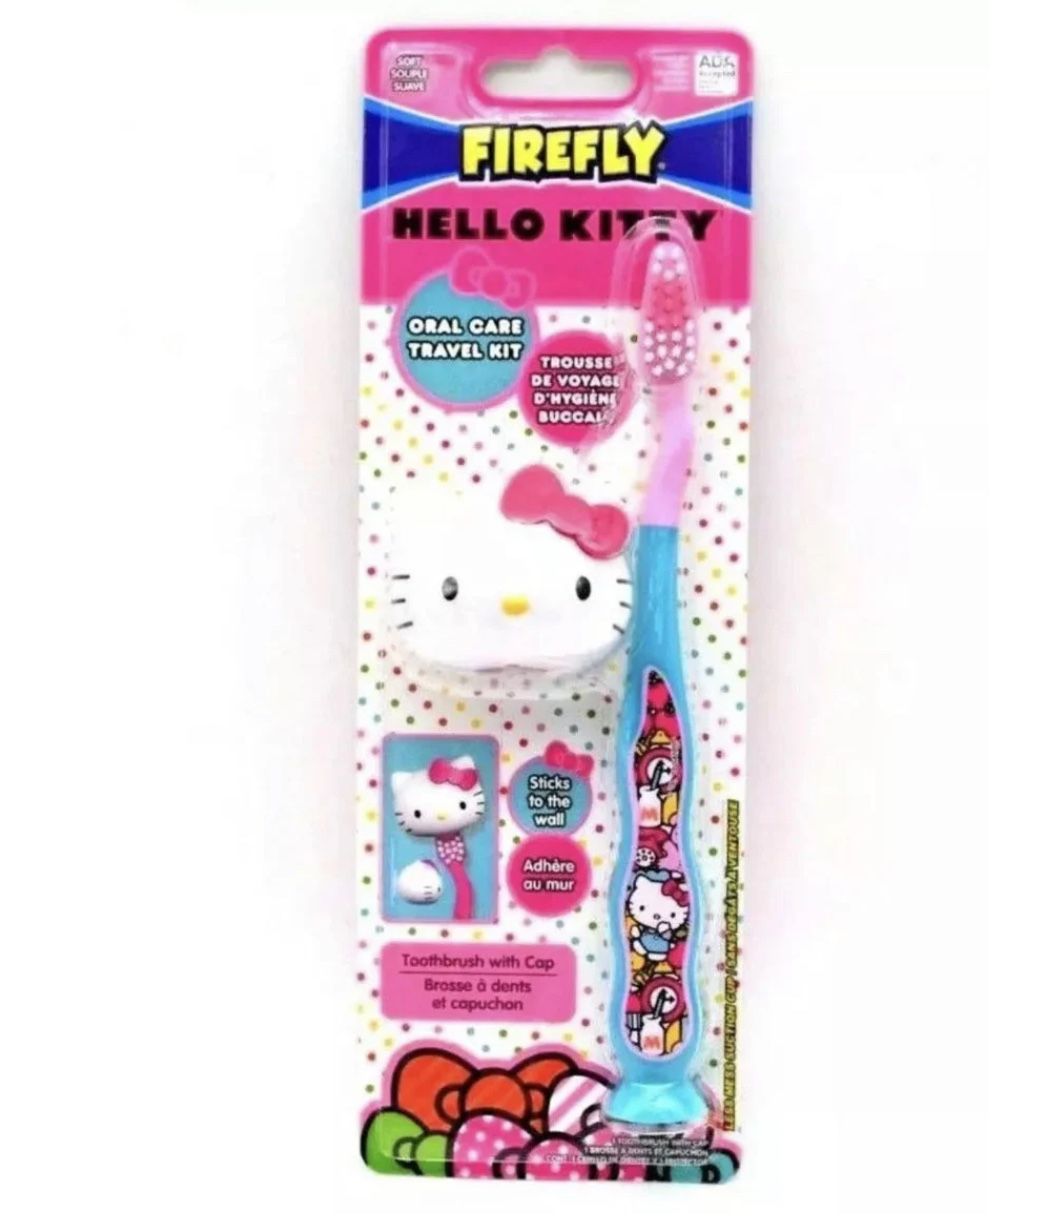 Sanrio Firefly Hello Kitty Soft Toothbrush w/ Cap Travel